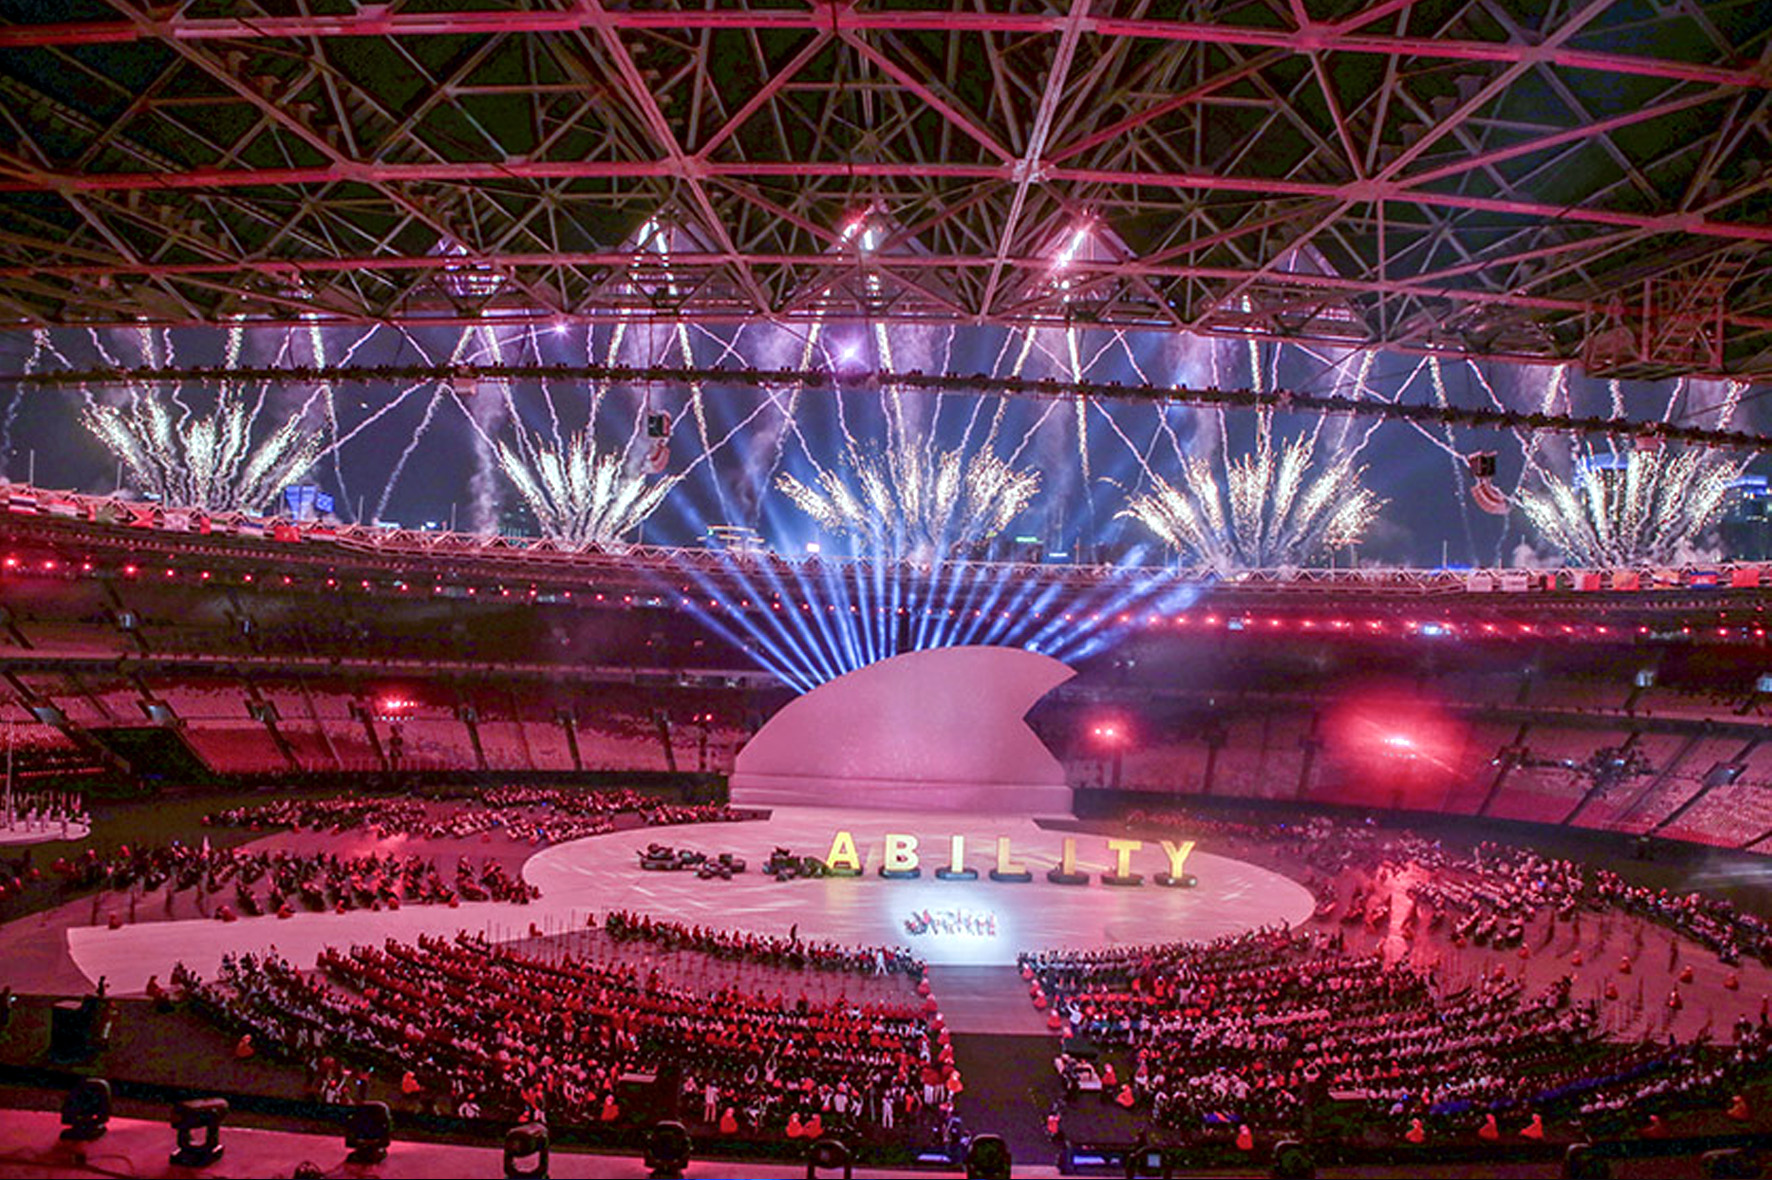 Bakal Meriah! FIFA Izinkan Piala Dunia U-20 di Indonesia Gelar Seremonial